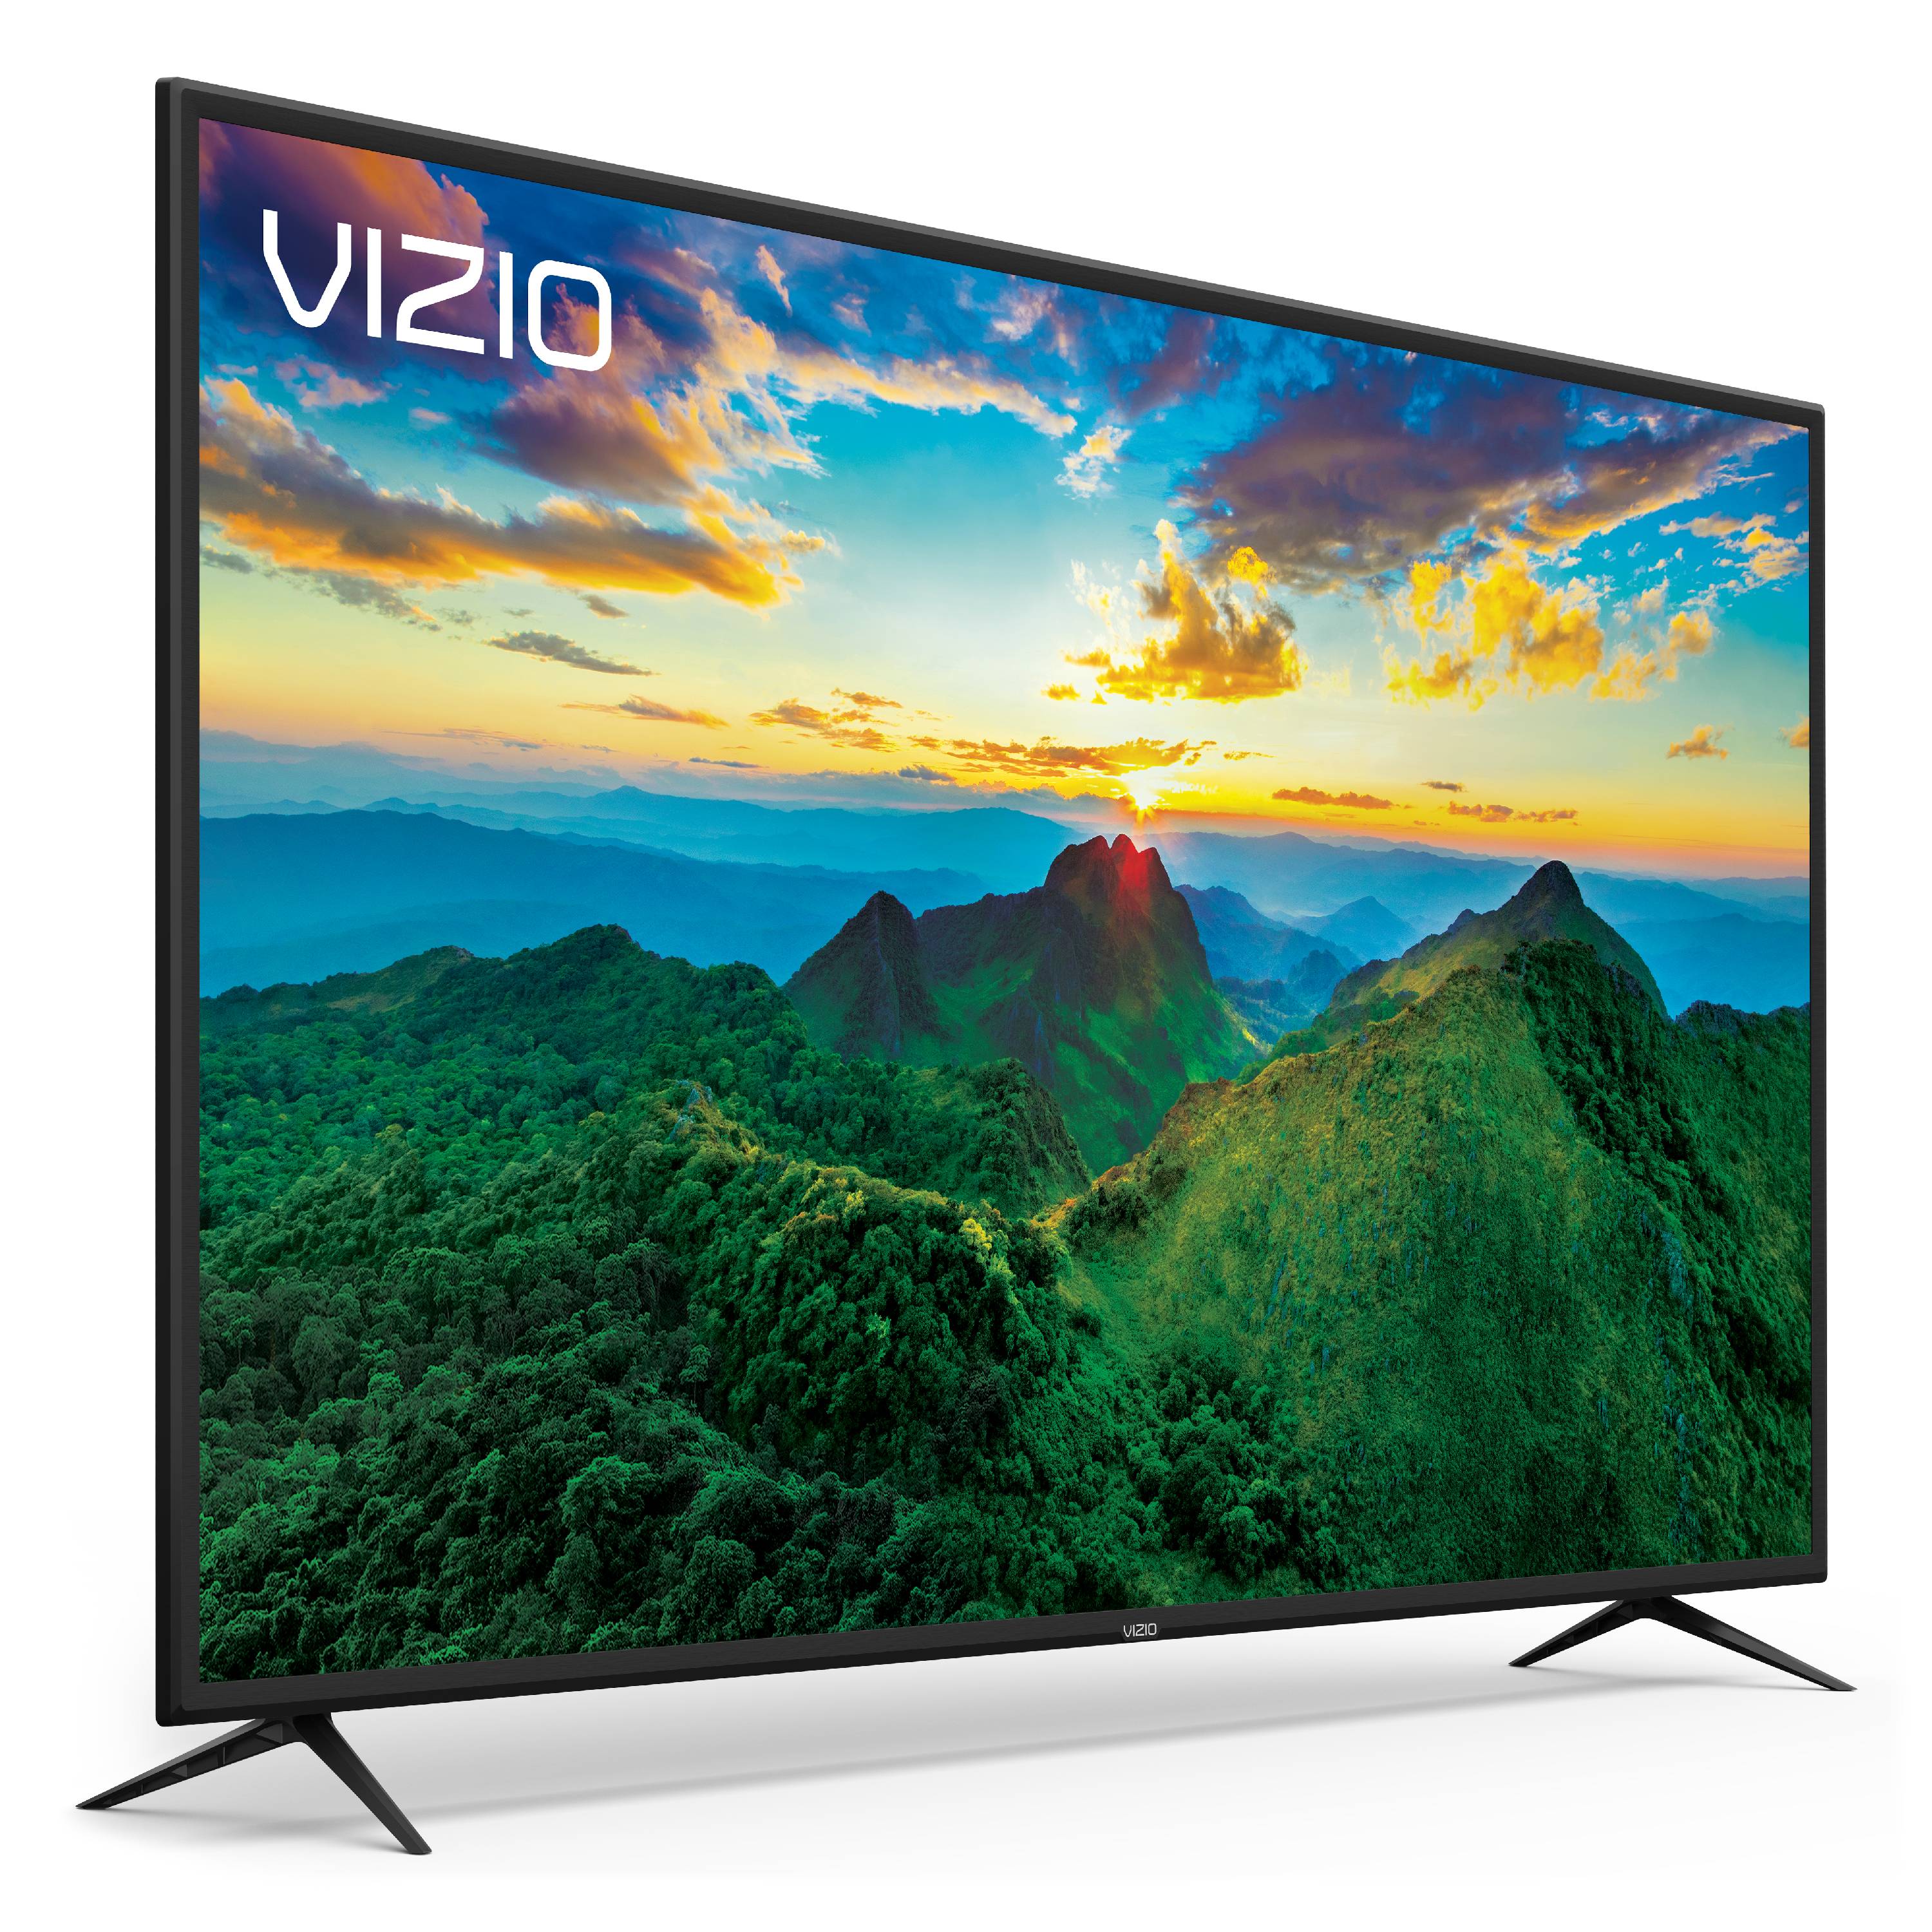 VIZIO 60" Class D-Series 4K (2160P) Ultra HD HDR Smart LED TV (D60-F3) (2018 Model) - image 4 of 13